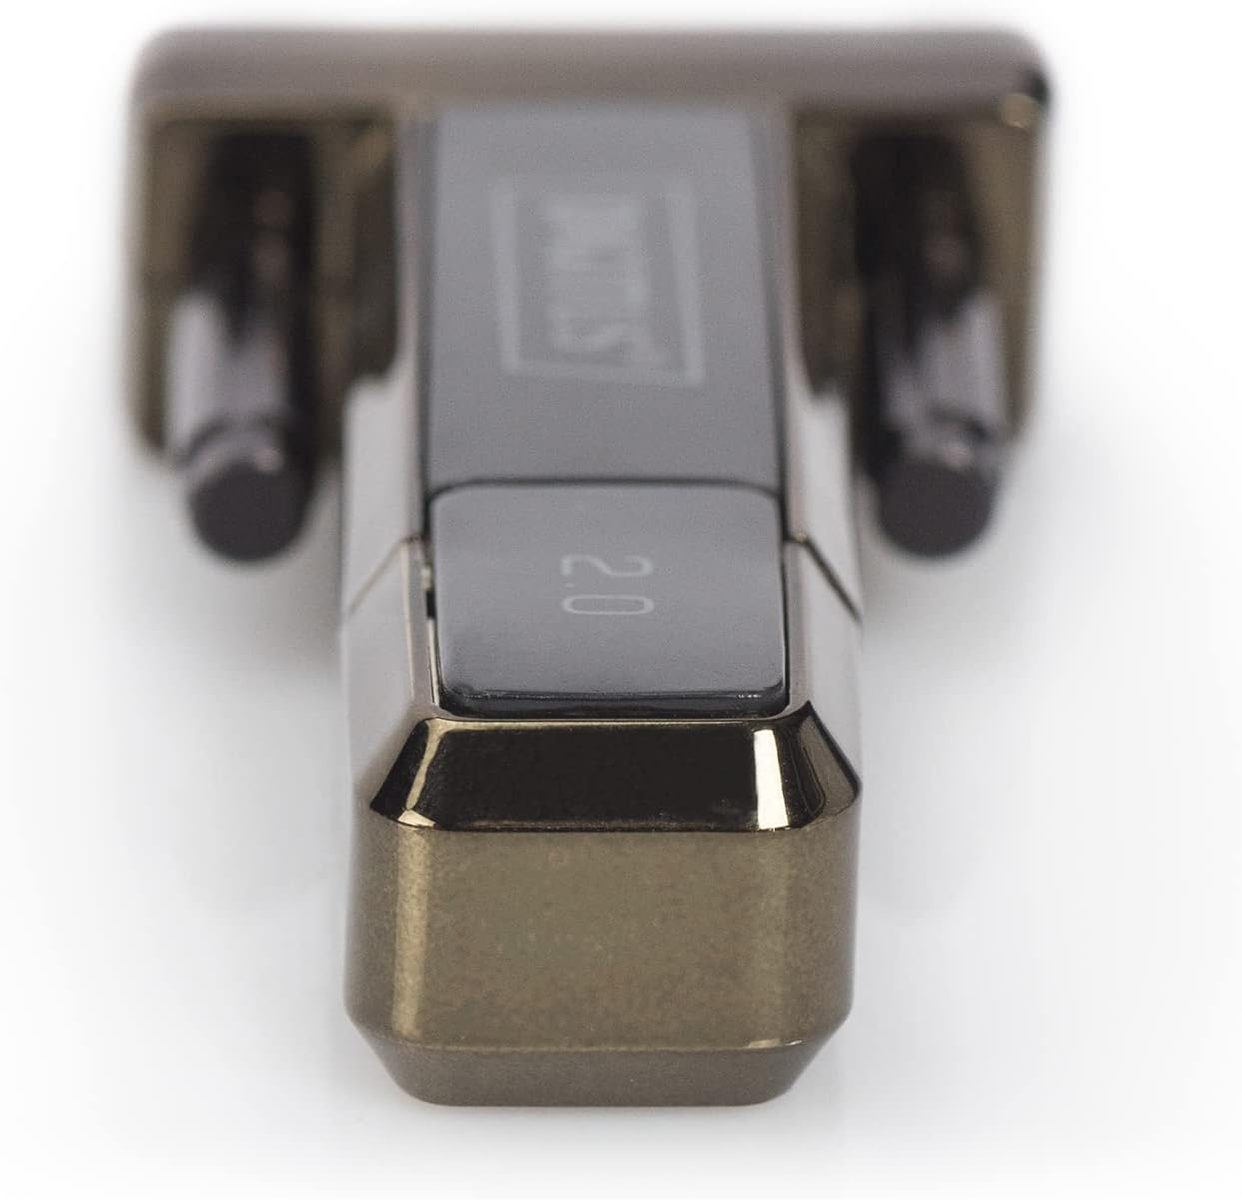 USB Schwarz DIGITUS DA-70156 Kabel,